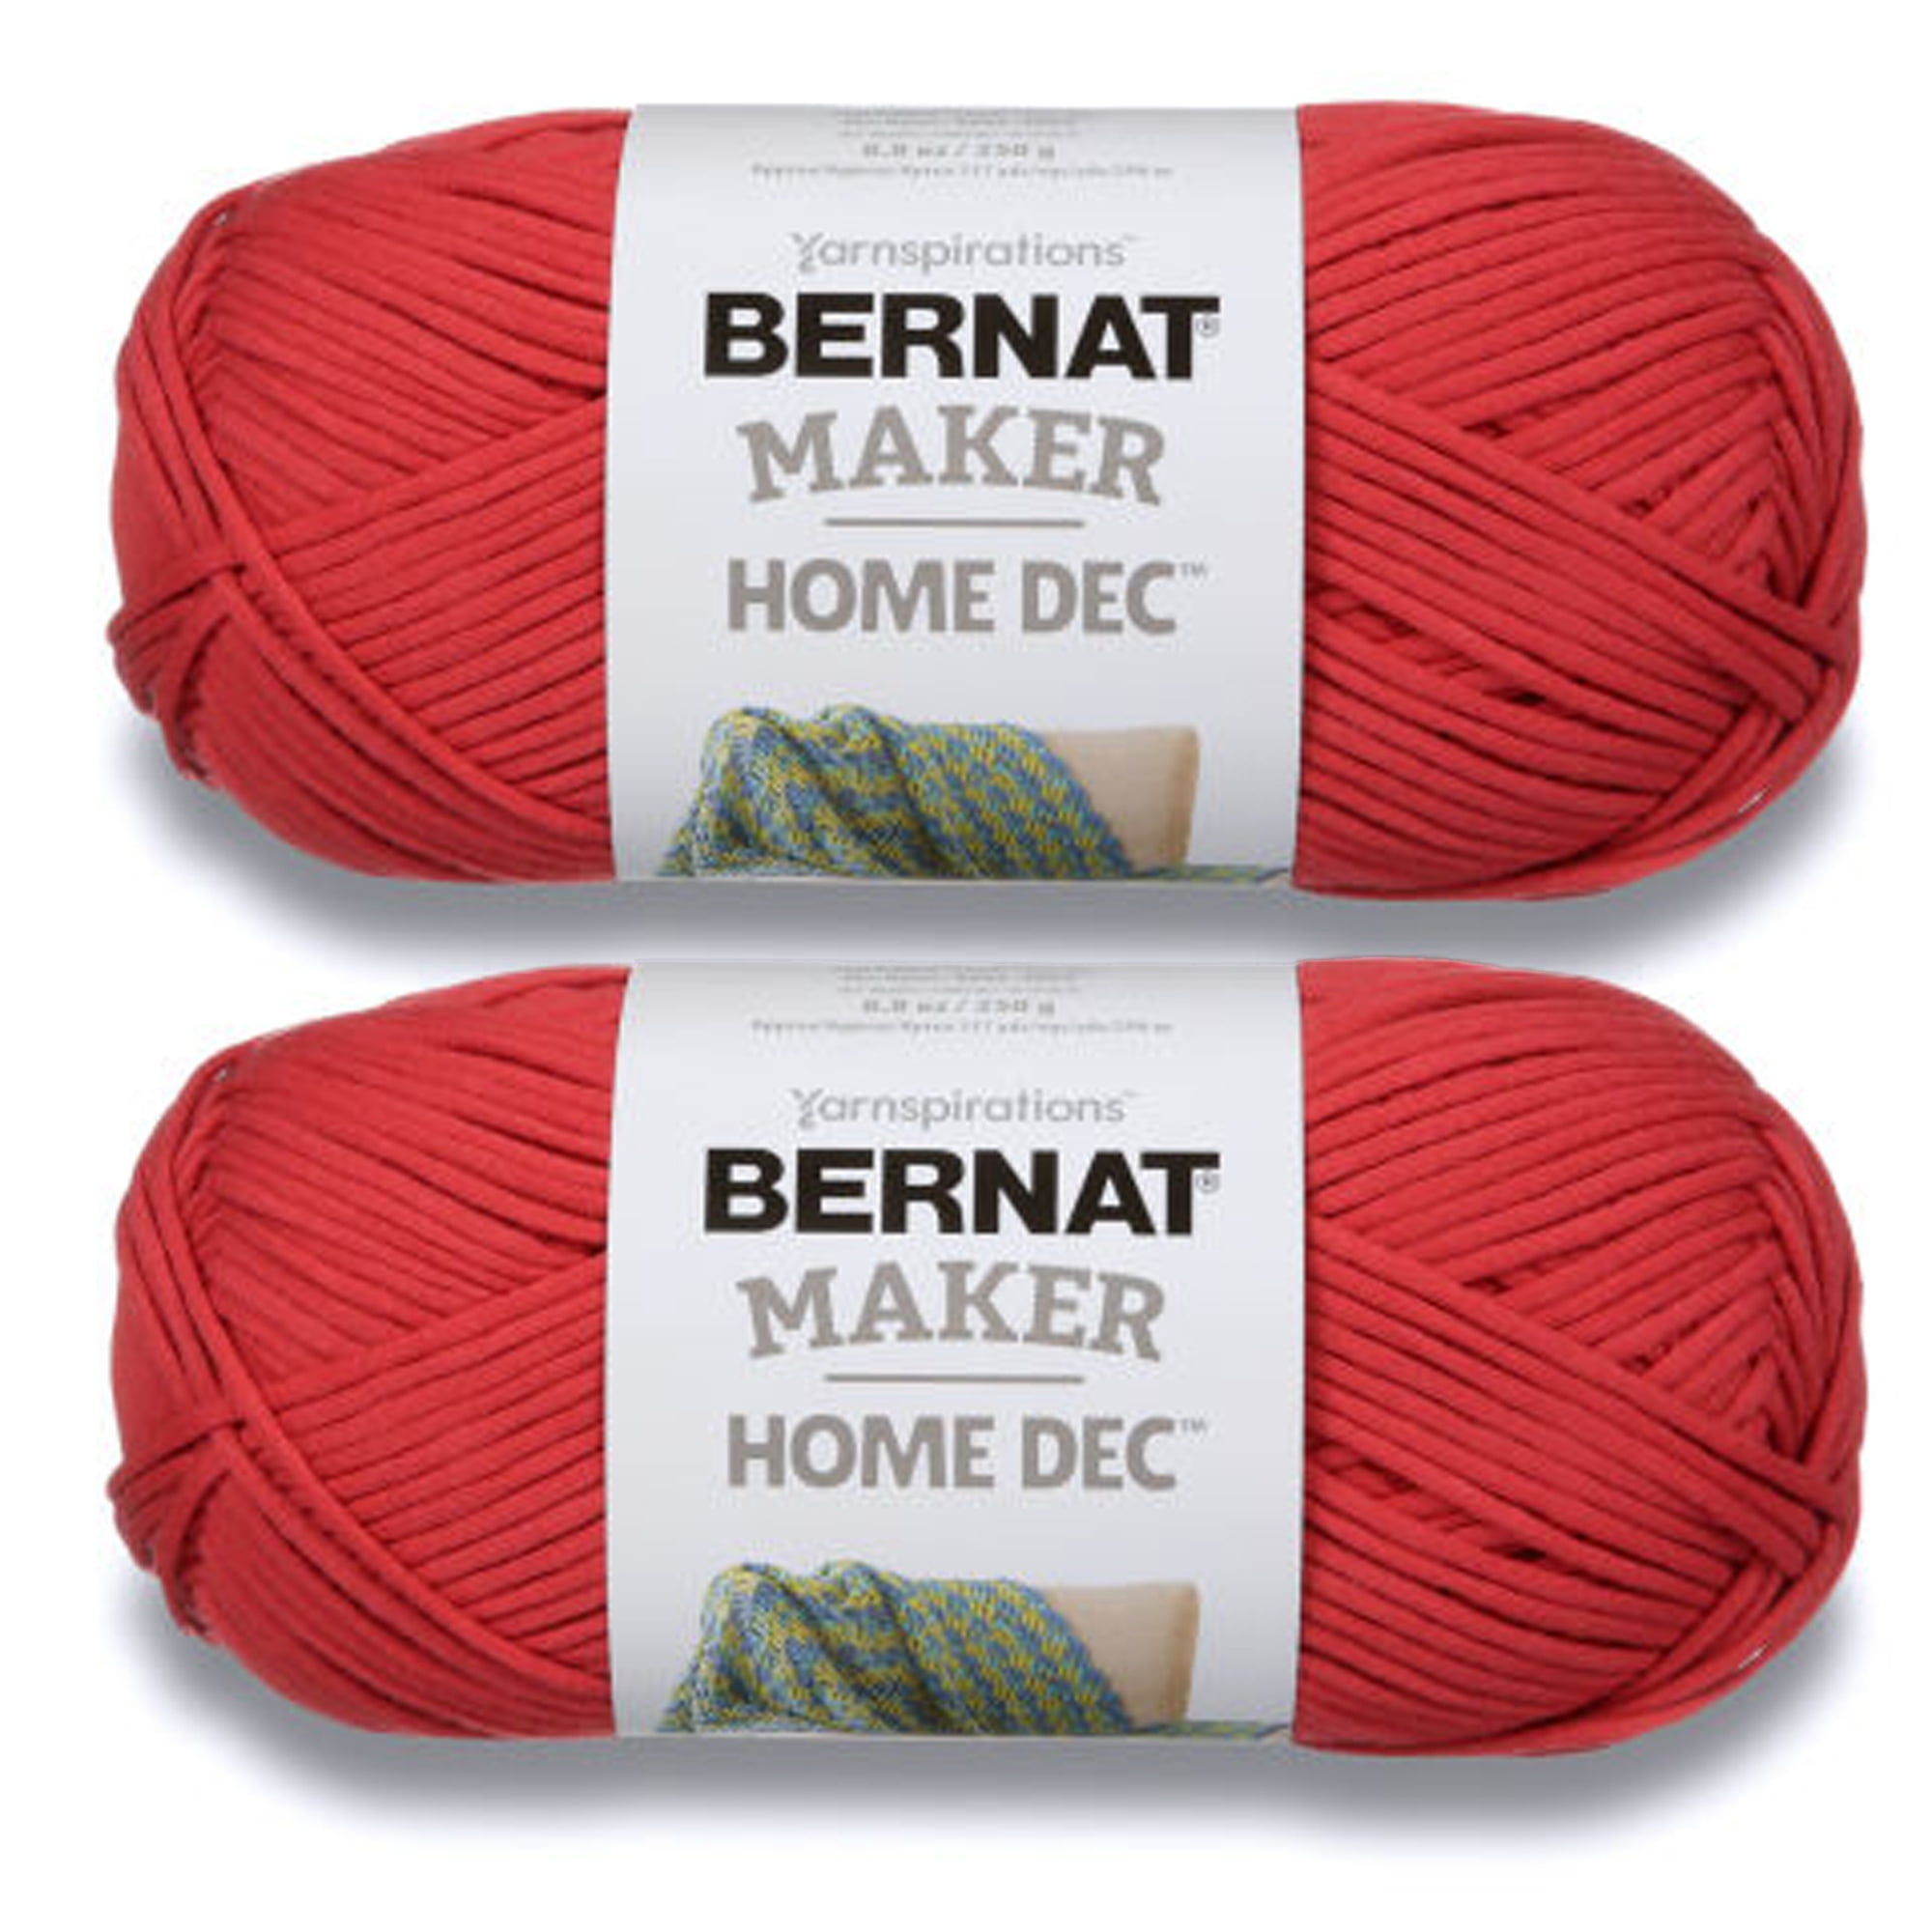 Bernat maker home dec yarn assorted colours, price is per skien.